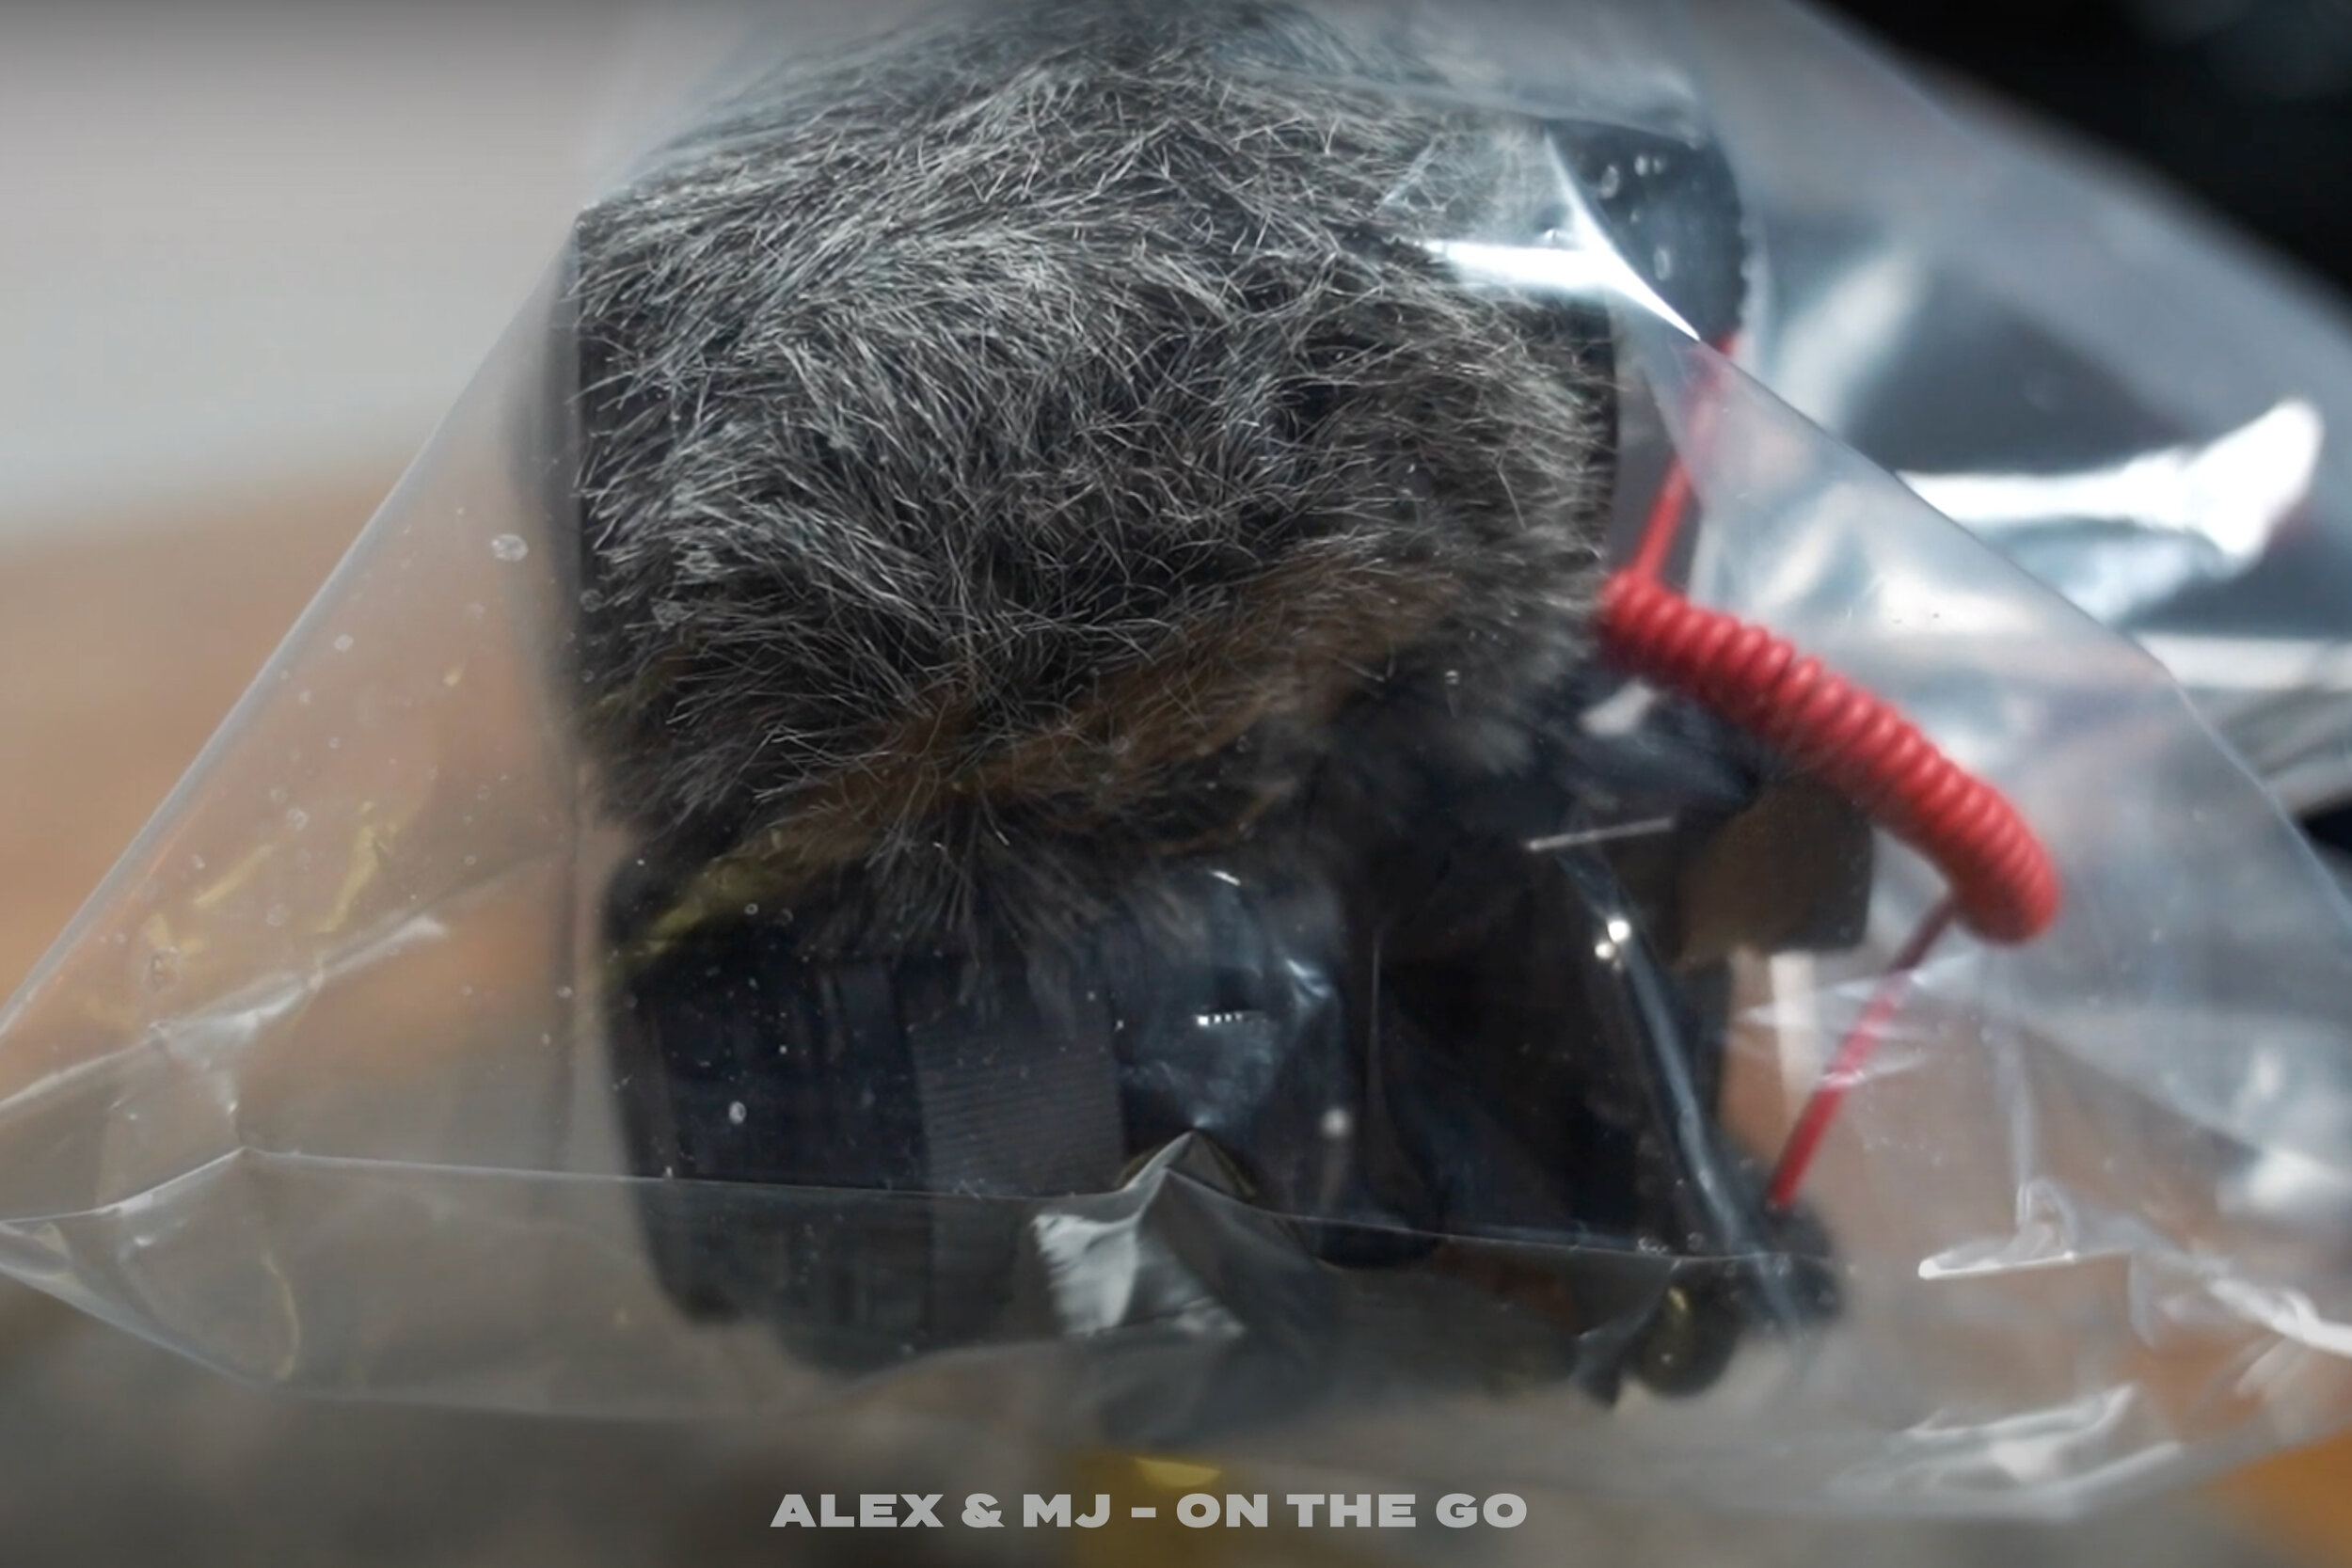 Alex-MJ-On-the-GO-Conseils-filmer-temps-froid-sac-de-congelation-camera-dégele-dans-sac.jpg